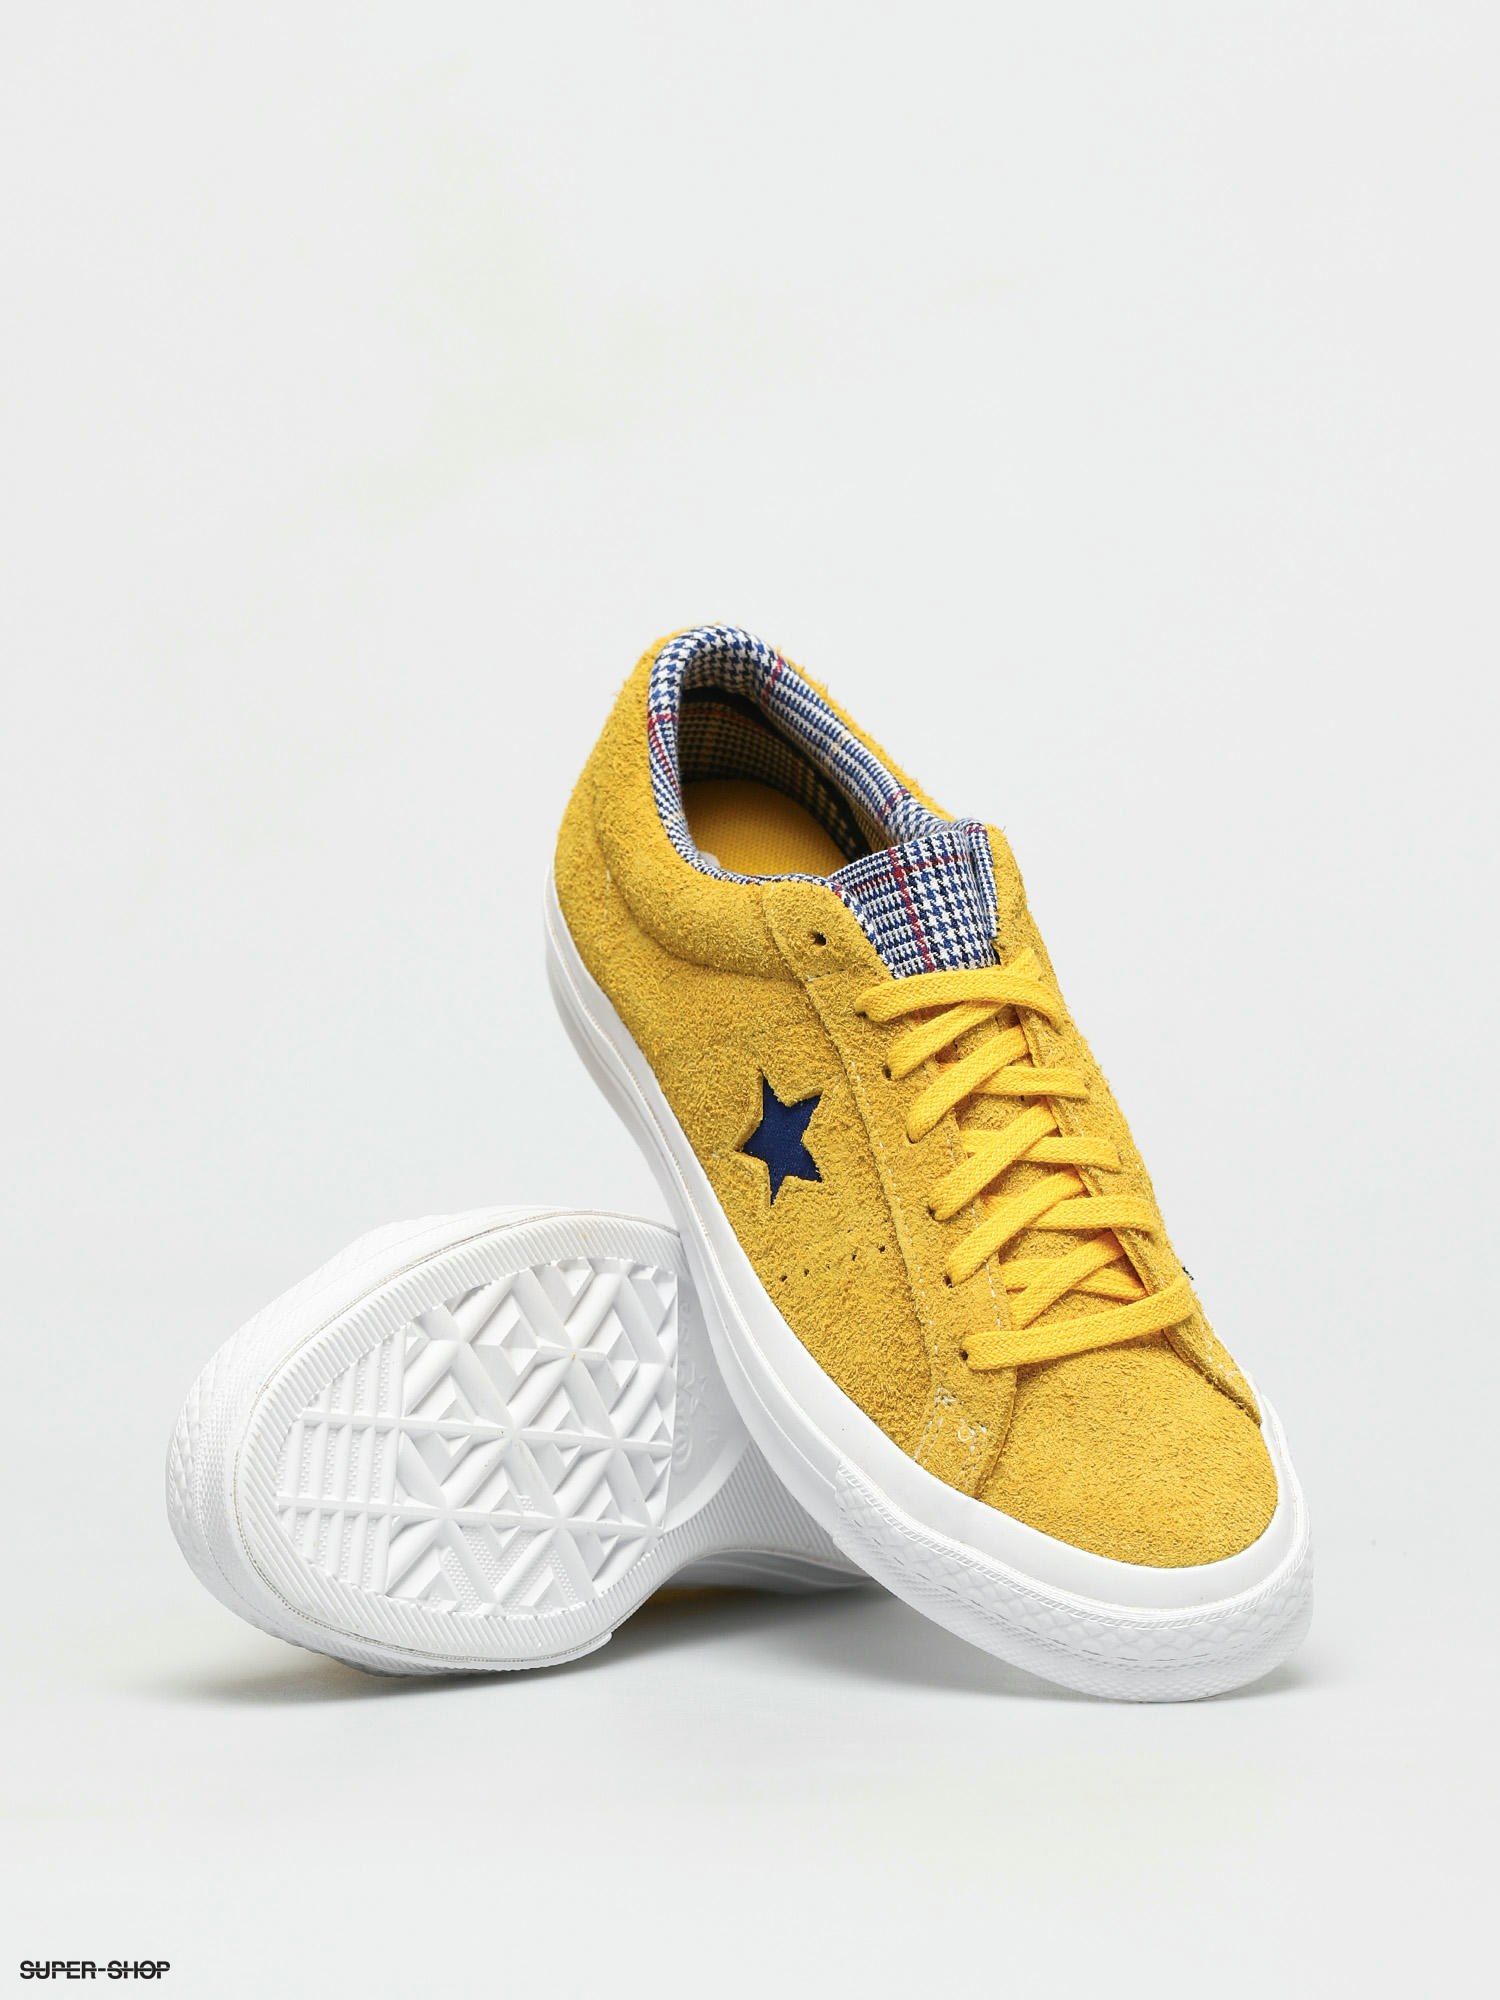 converse yellow star